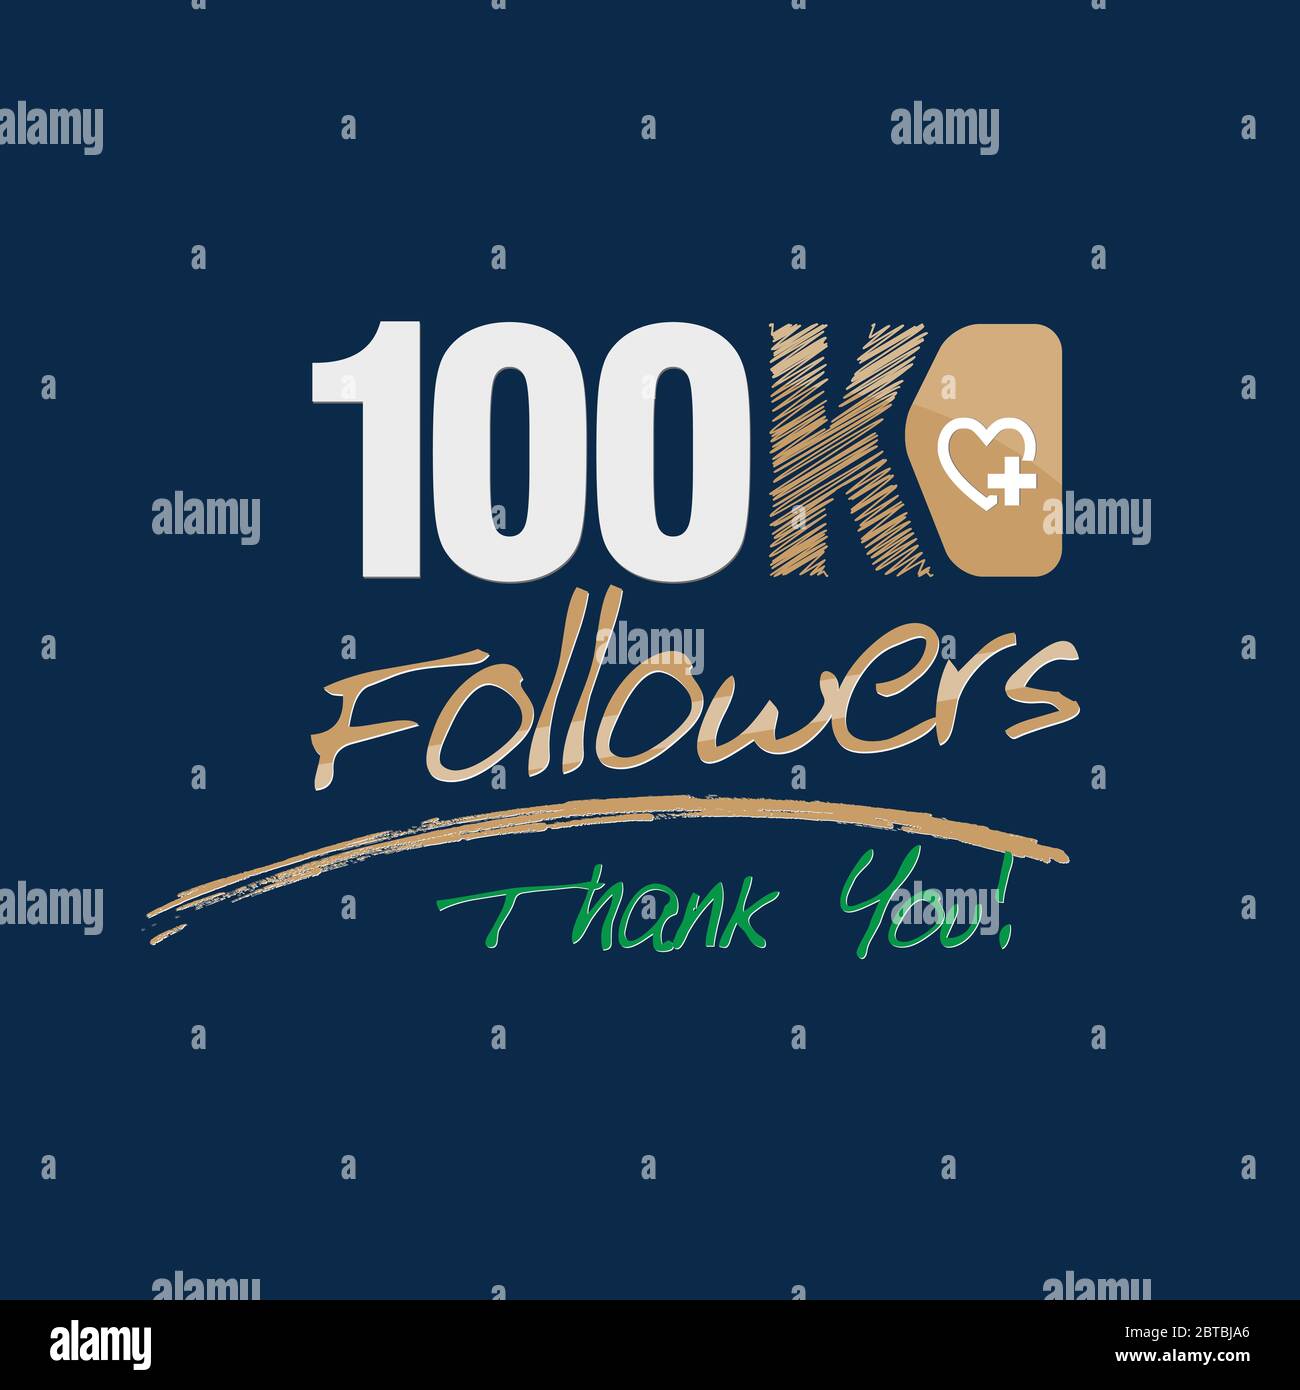 Thank you design template for social network. 100K Followers Stock Vector